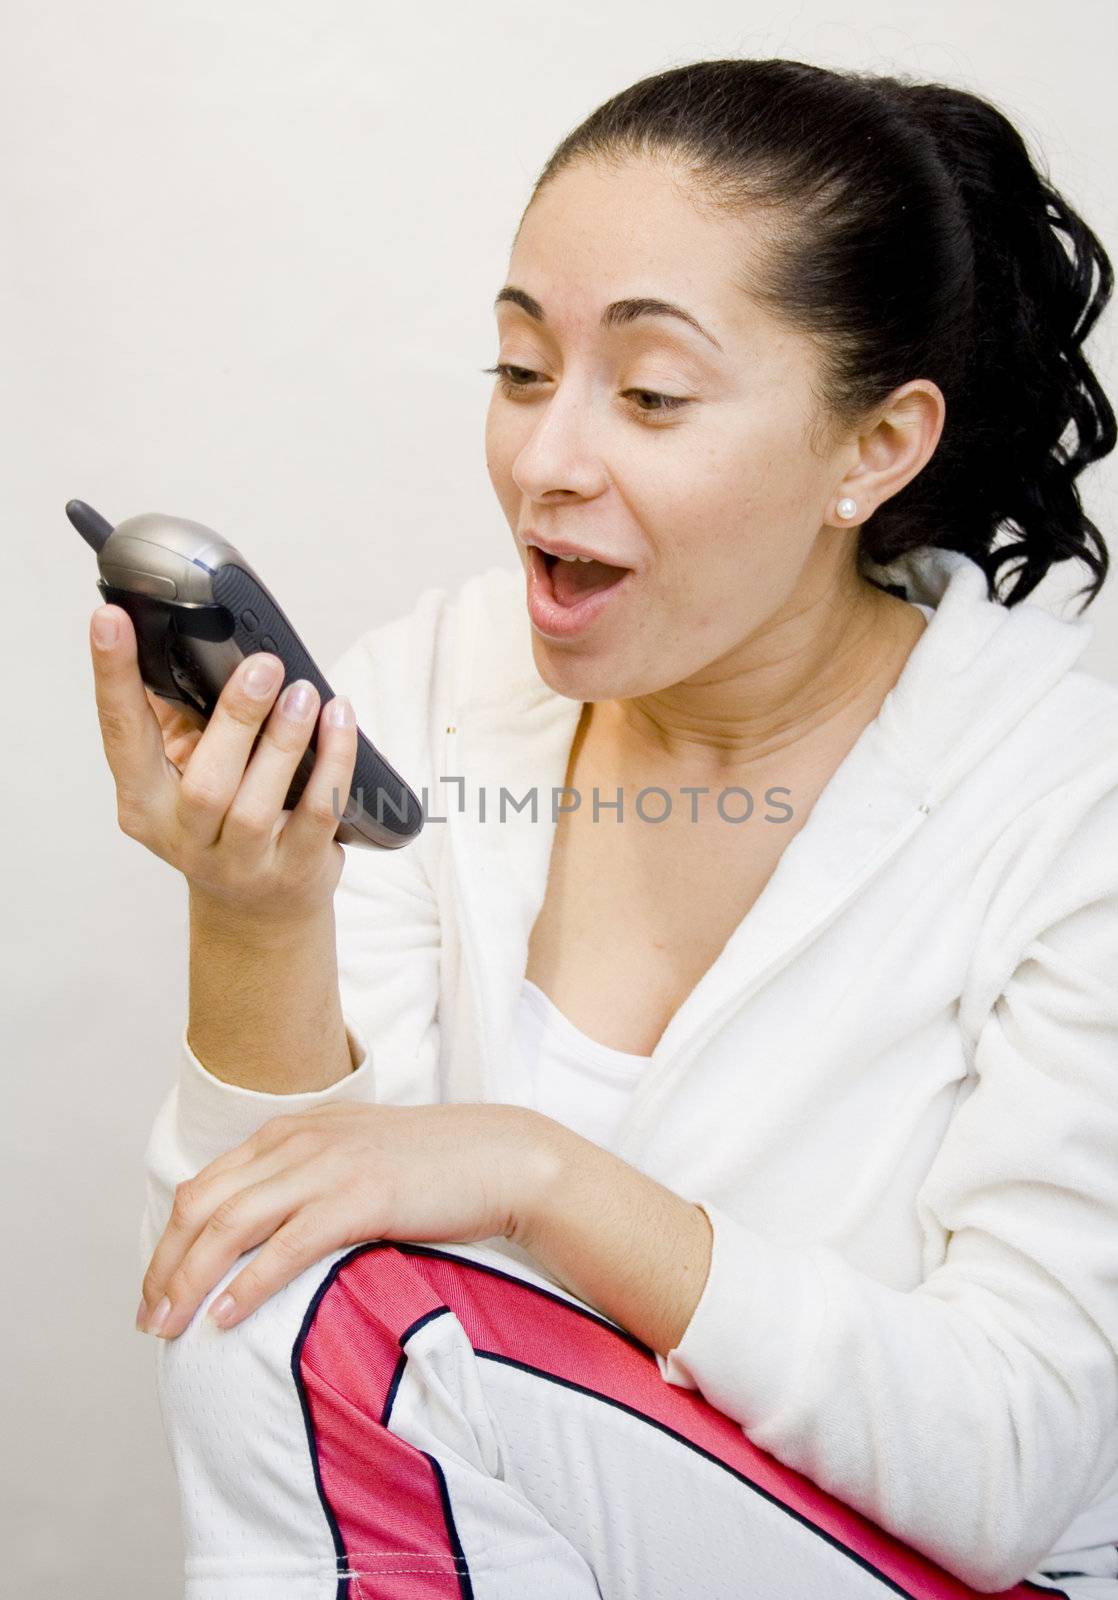 Young hispanic woman yelling at phone